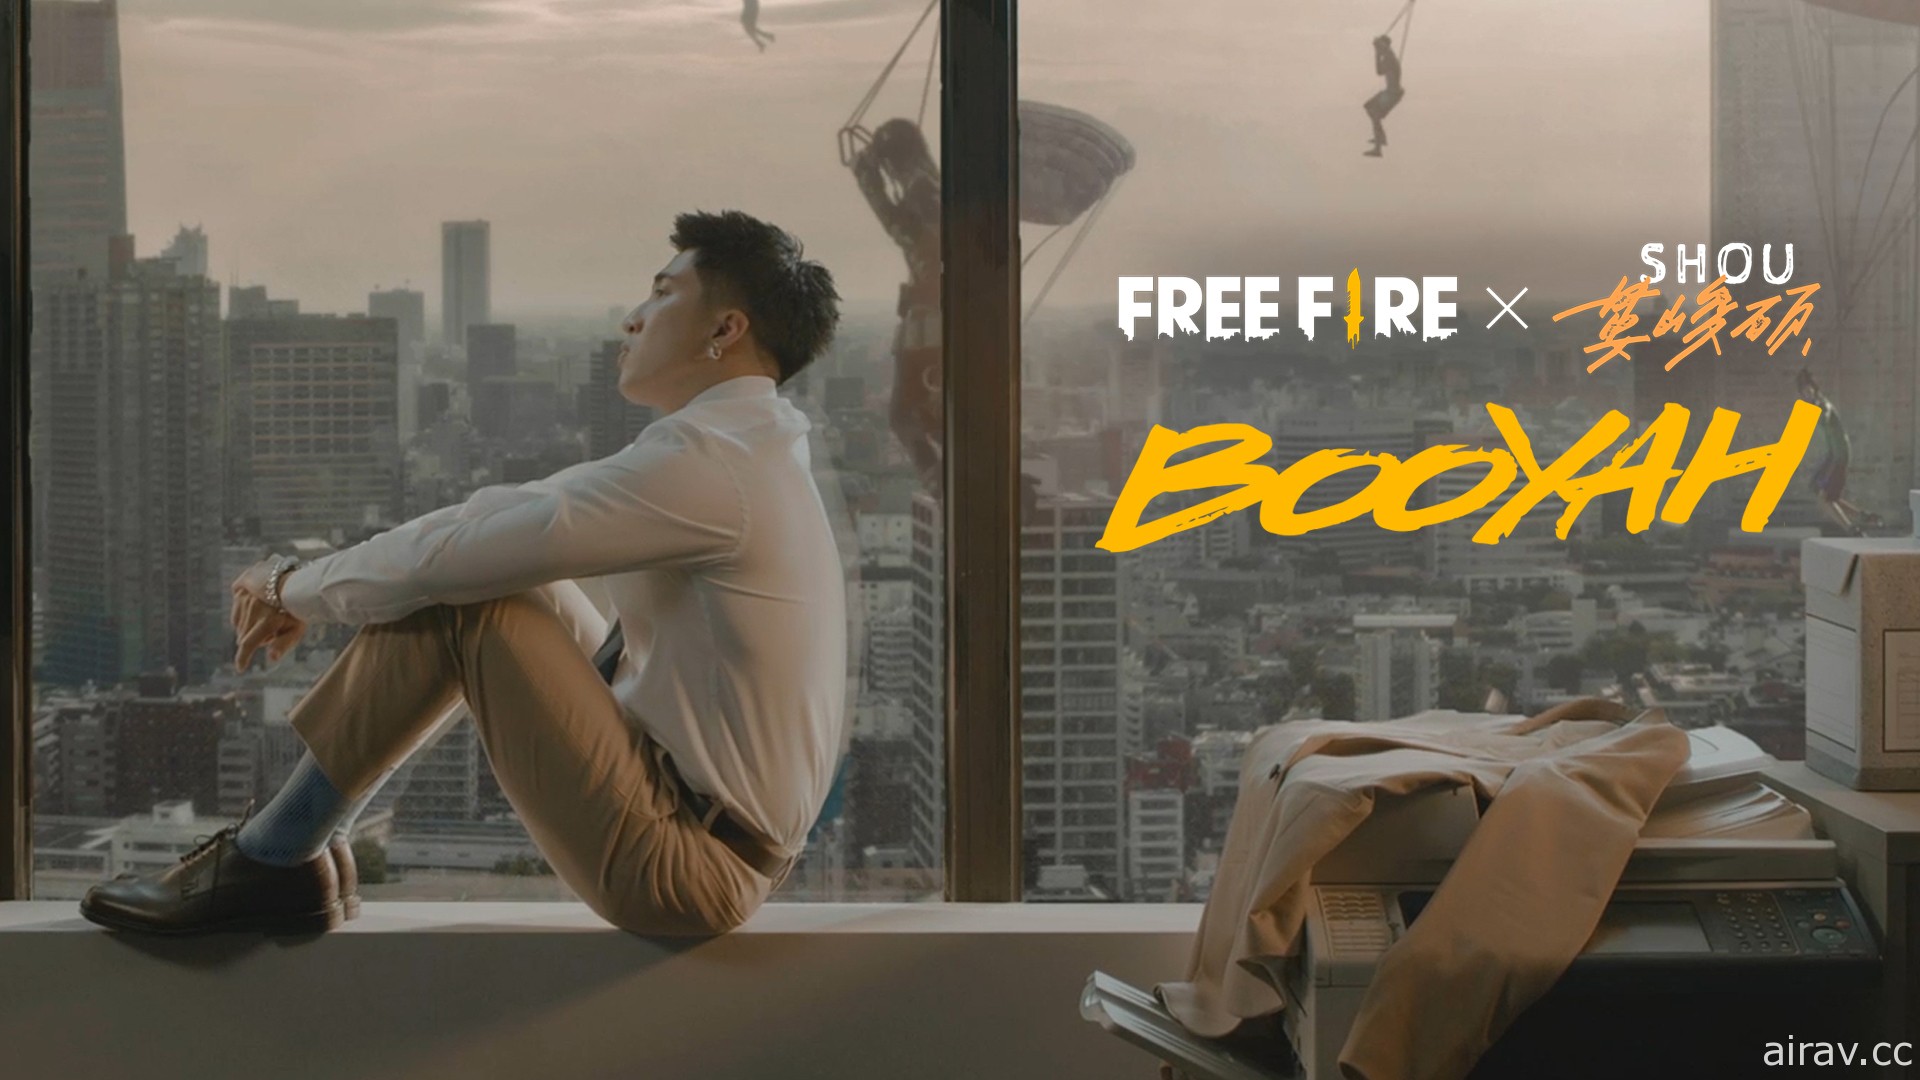 《Free Fire - 我要活下去》公开跨界携手饶舌歌手娄峻硕夏日主题曲“Booyah”